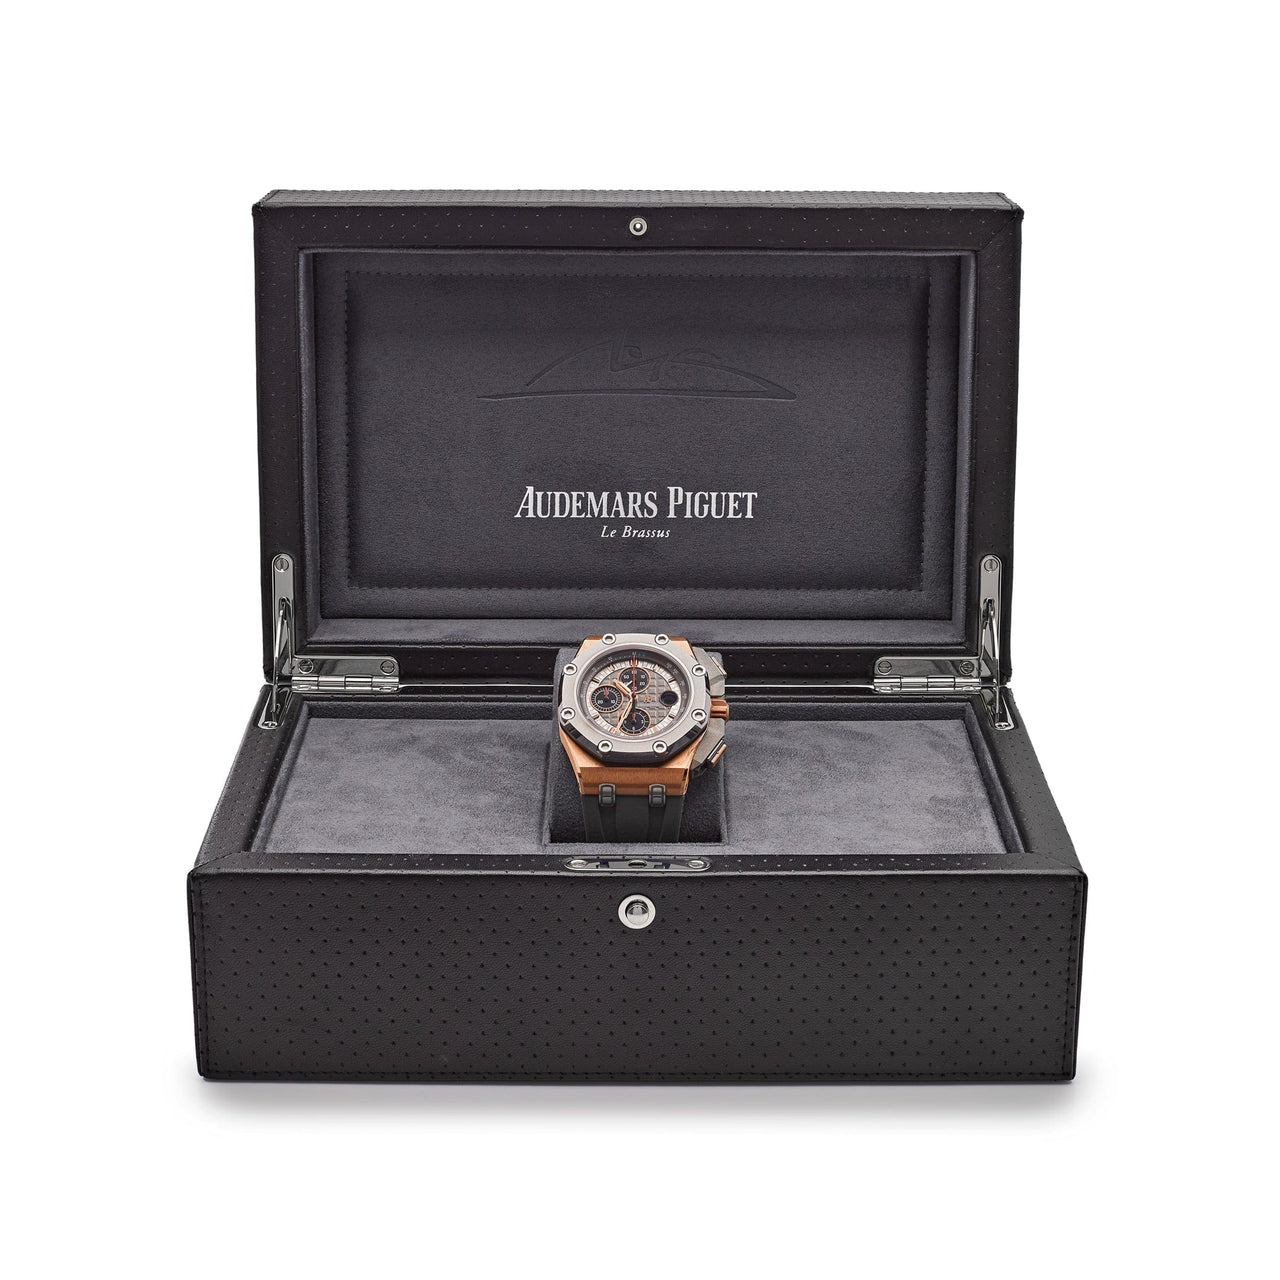 Luxury Watch Audemars Piguet Royal Oak Offshore Limited Edition Michael Schumacher 26568OM.OO.A004CA.01 Wrist Aficionado